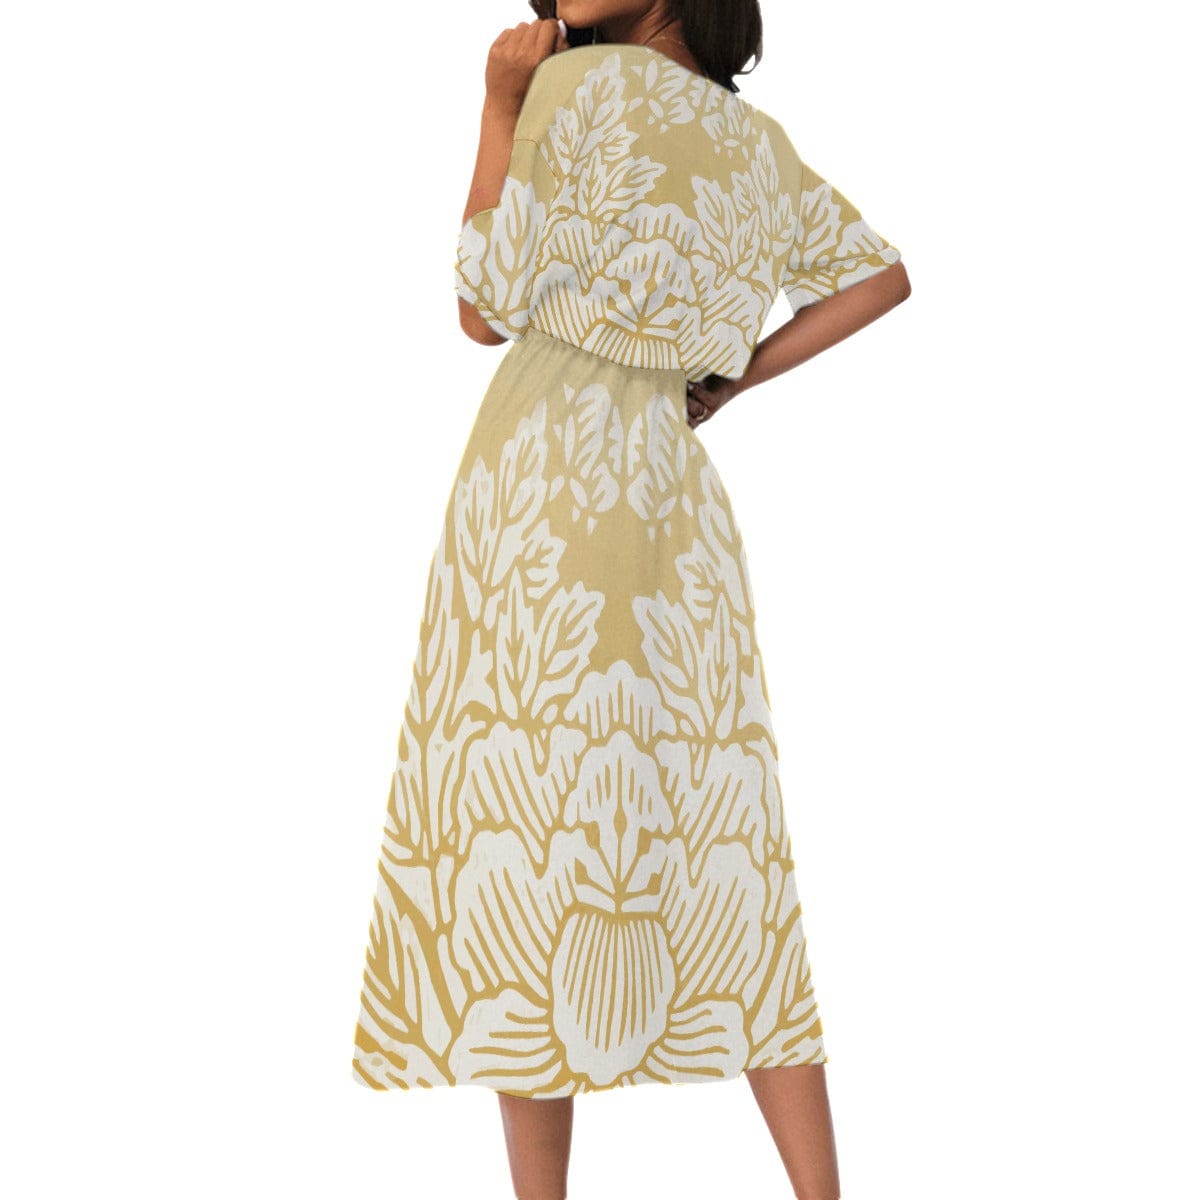 Yoycol All-Over Print Women's Elastic Waist Dress